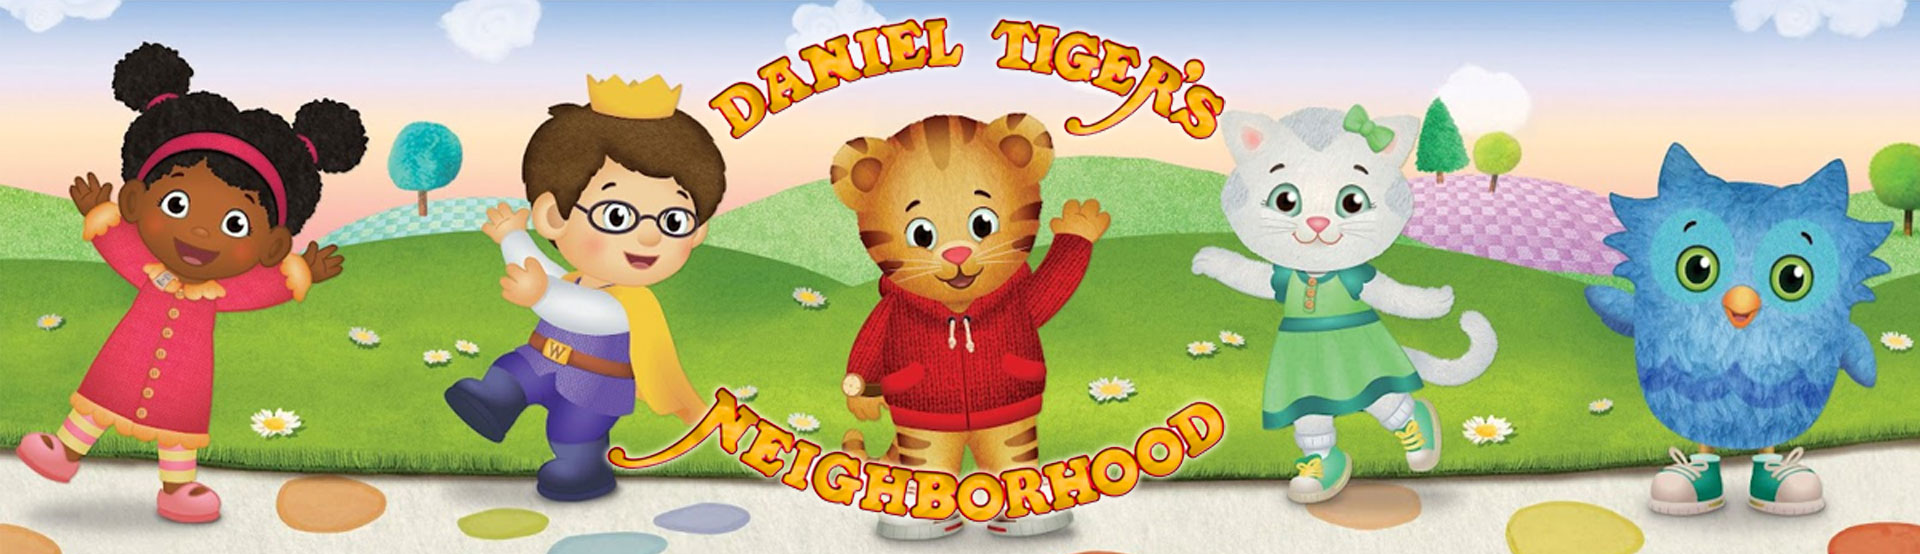 Banner image for Daniel Tiger's Neighborhood